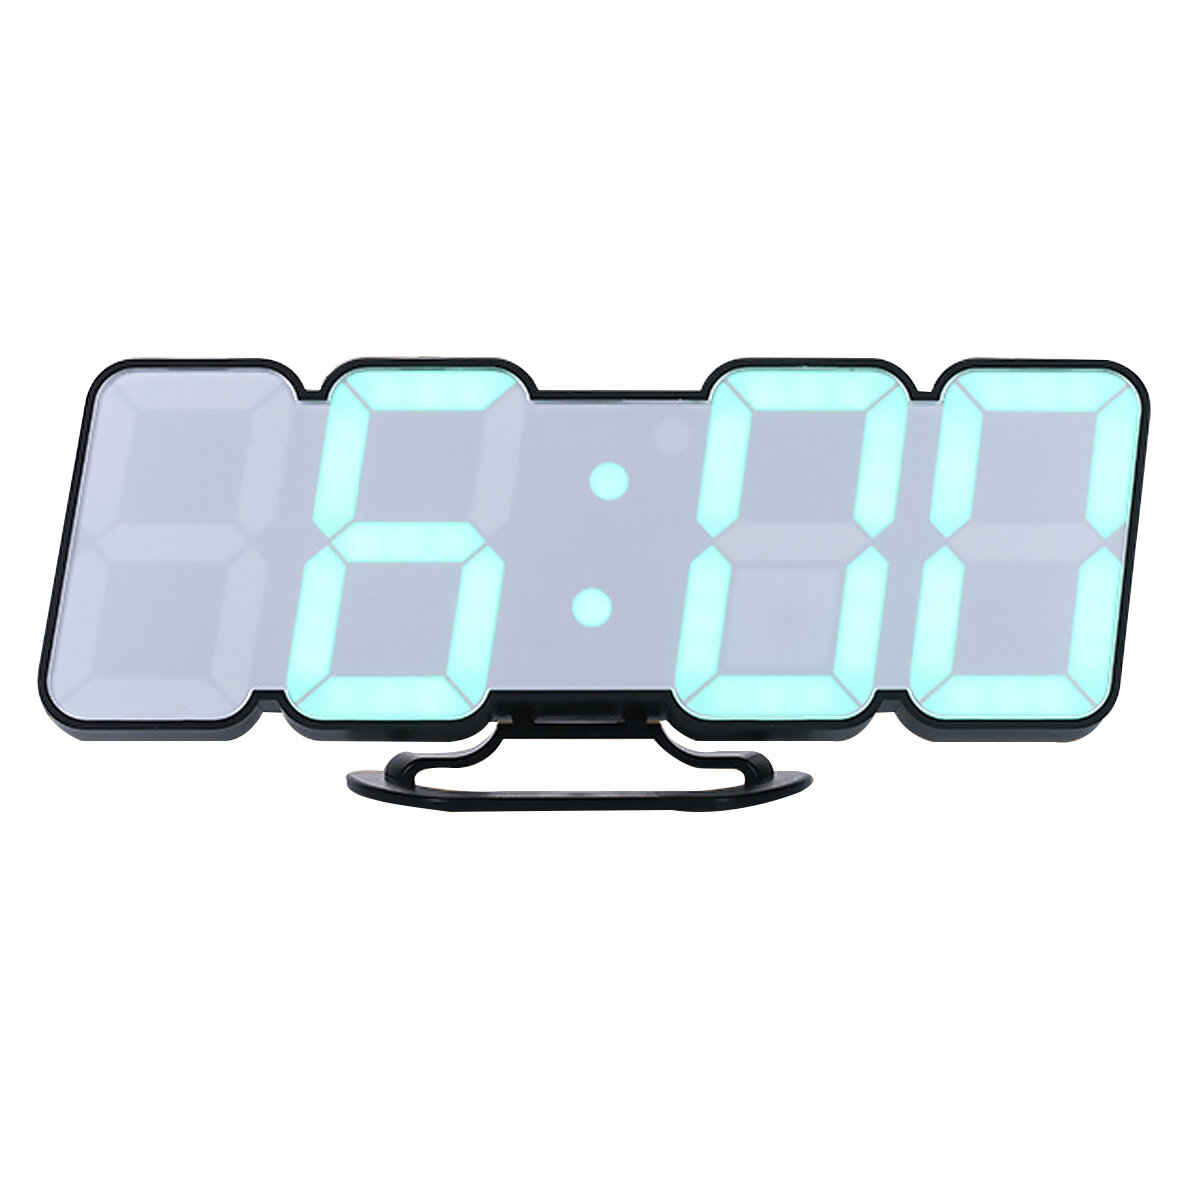 

30 Digital RGB LED Alarm Clock Remote Control Temperature Humidity Desktop Alarm Clock Voice Control Wall Mounted Clock